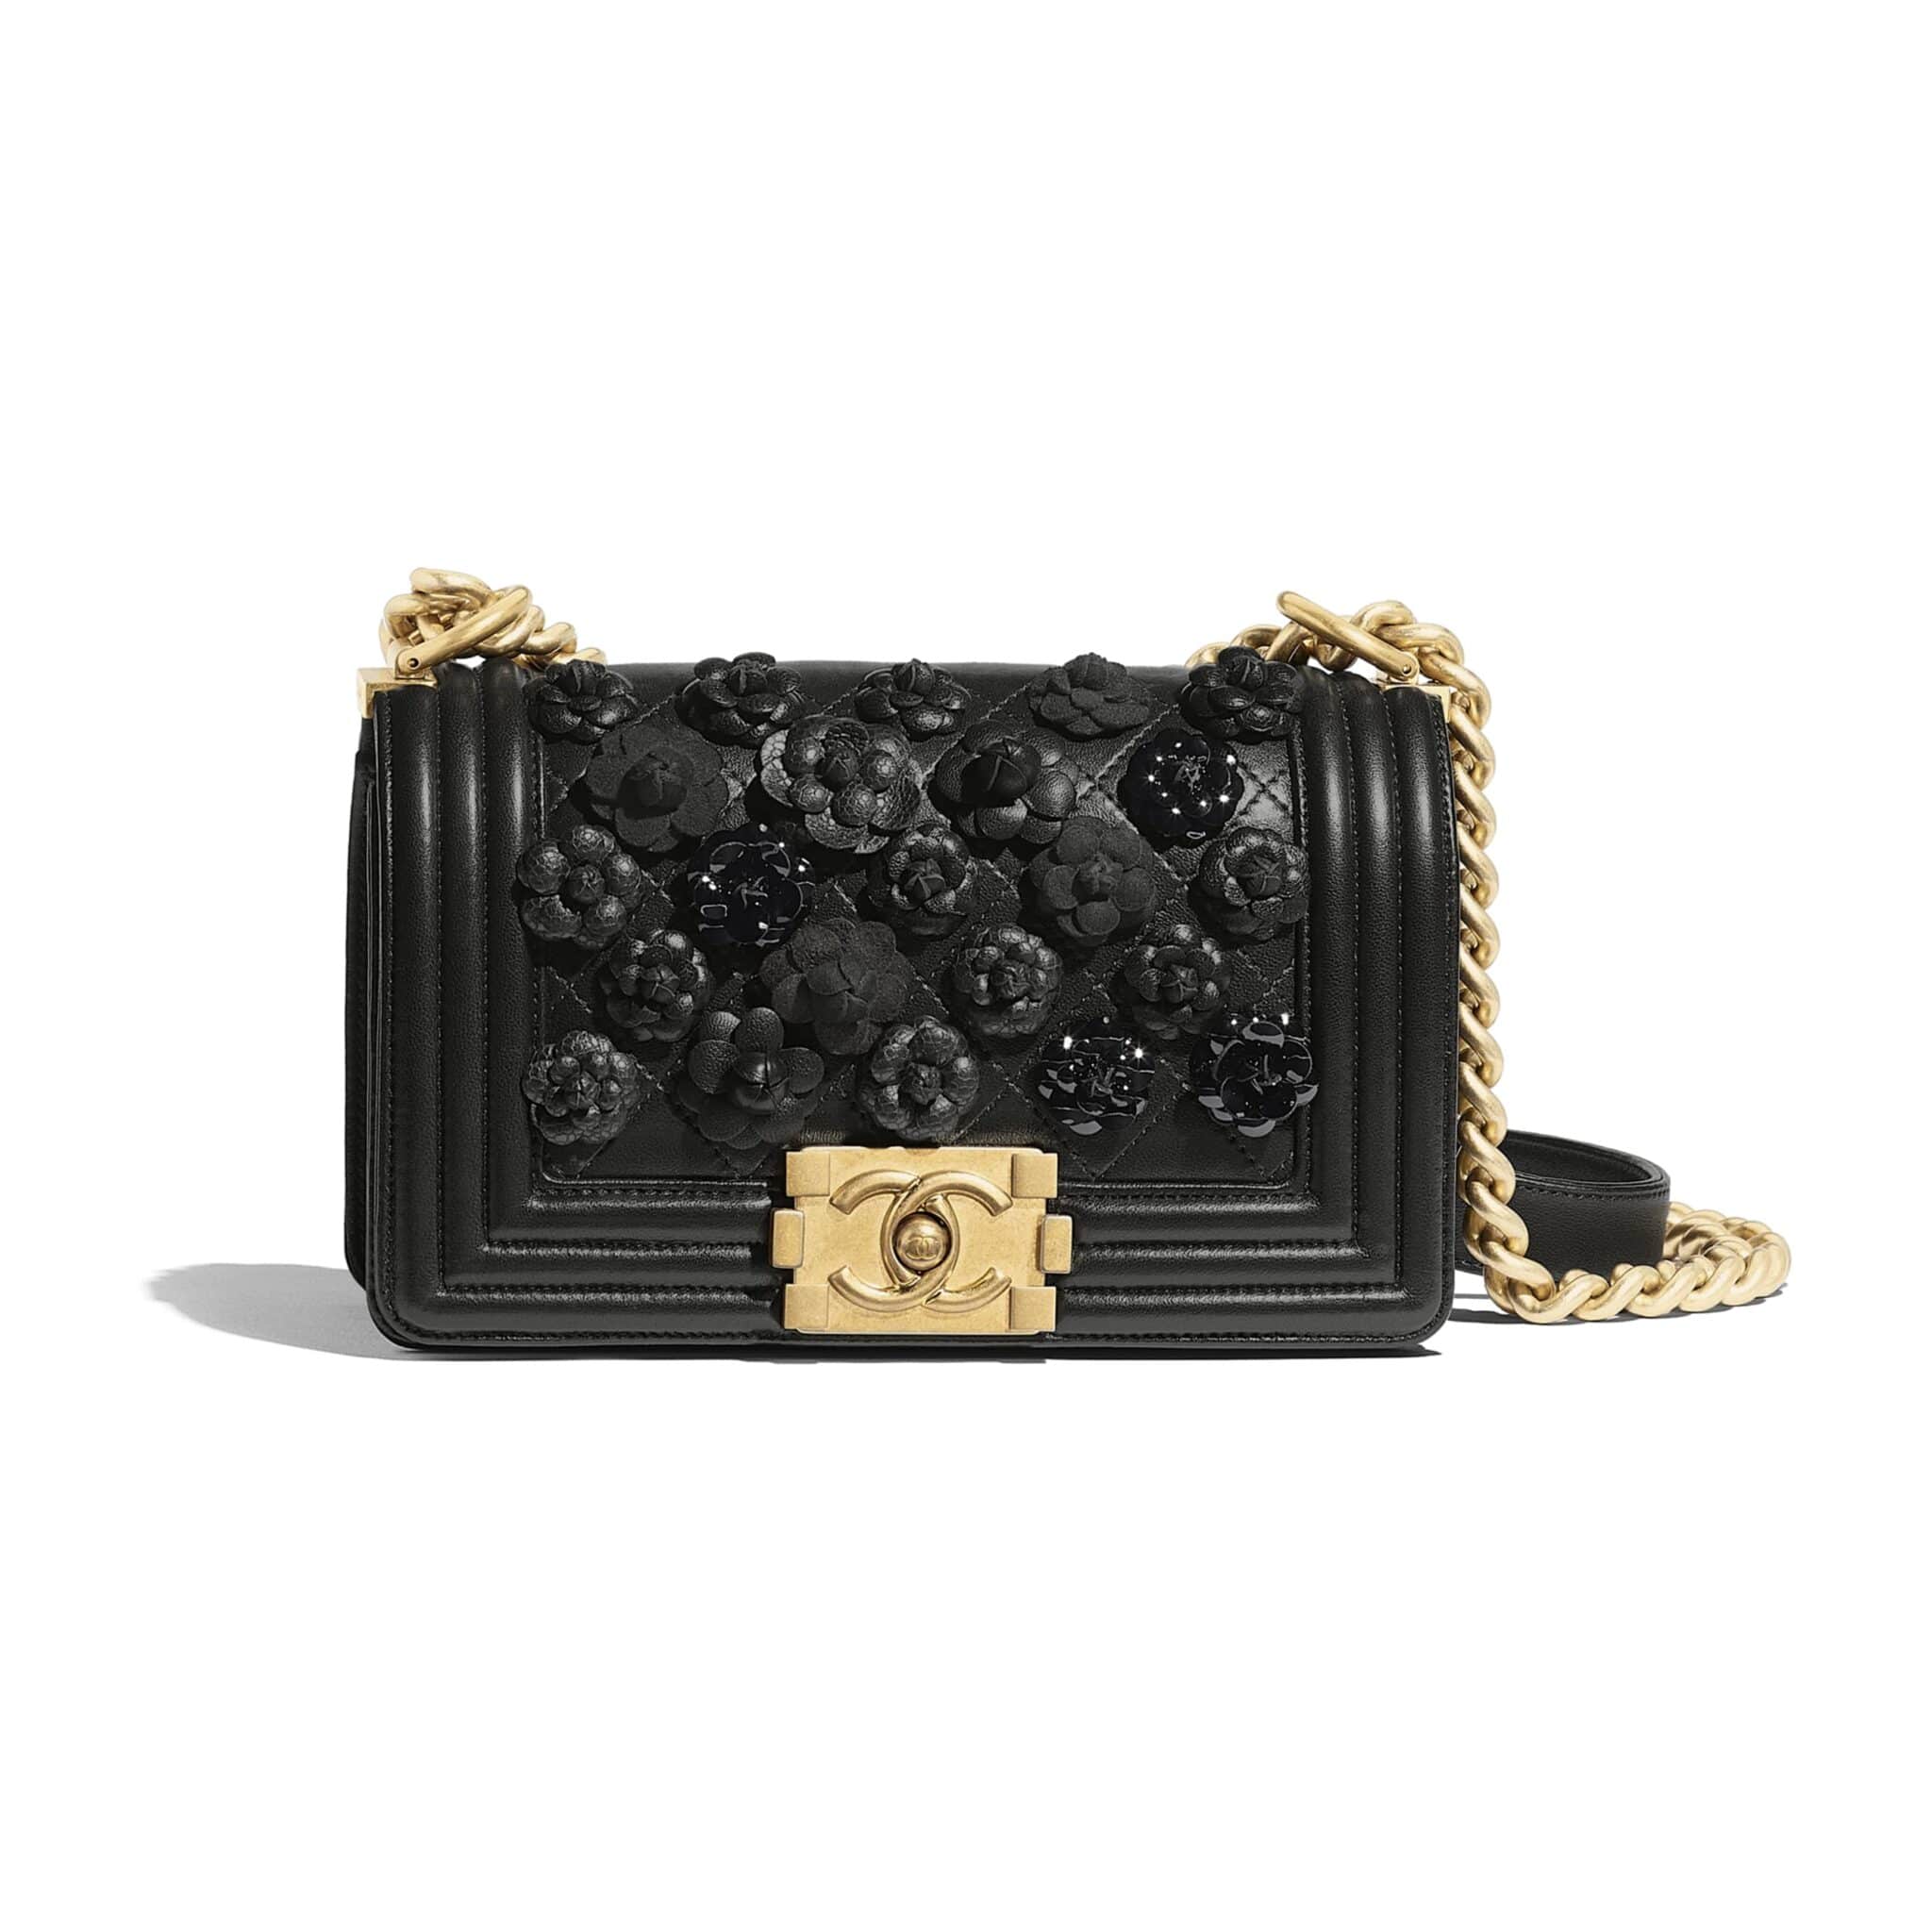 Classic Handbag Chanel Price Guide